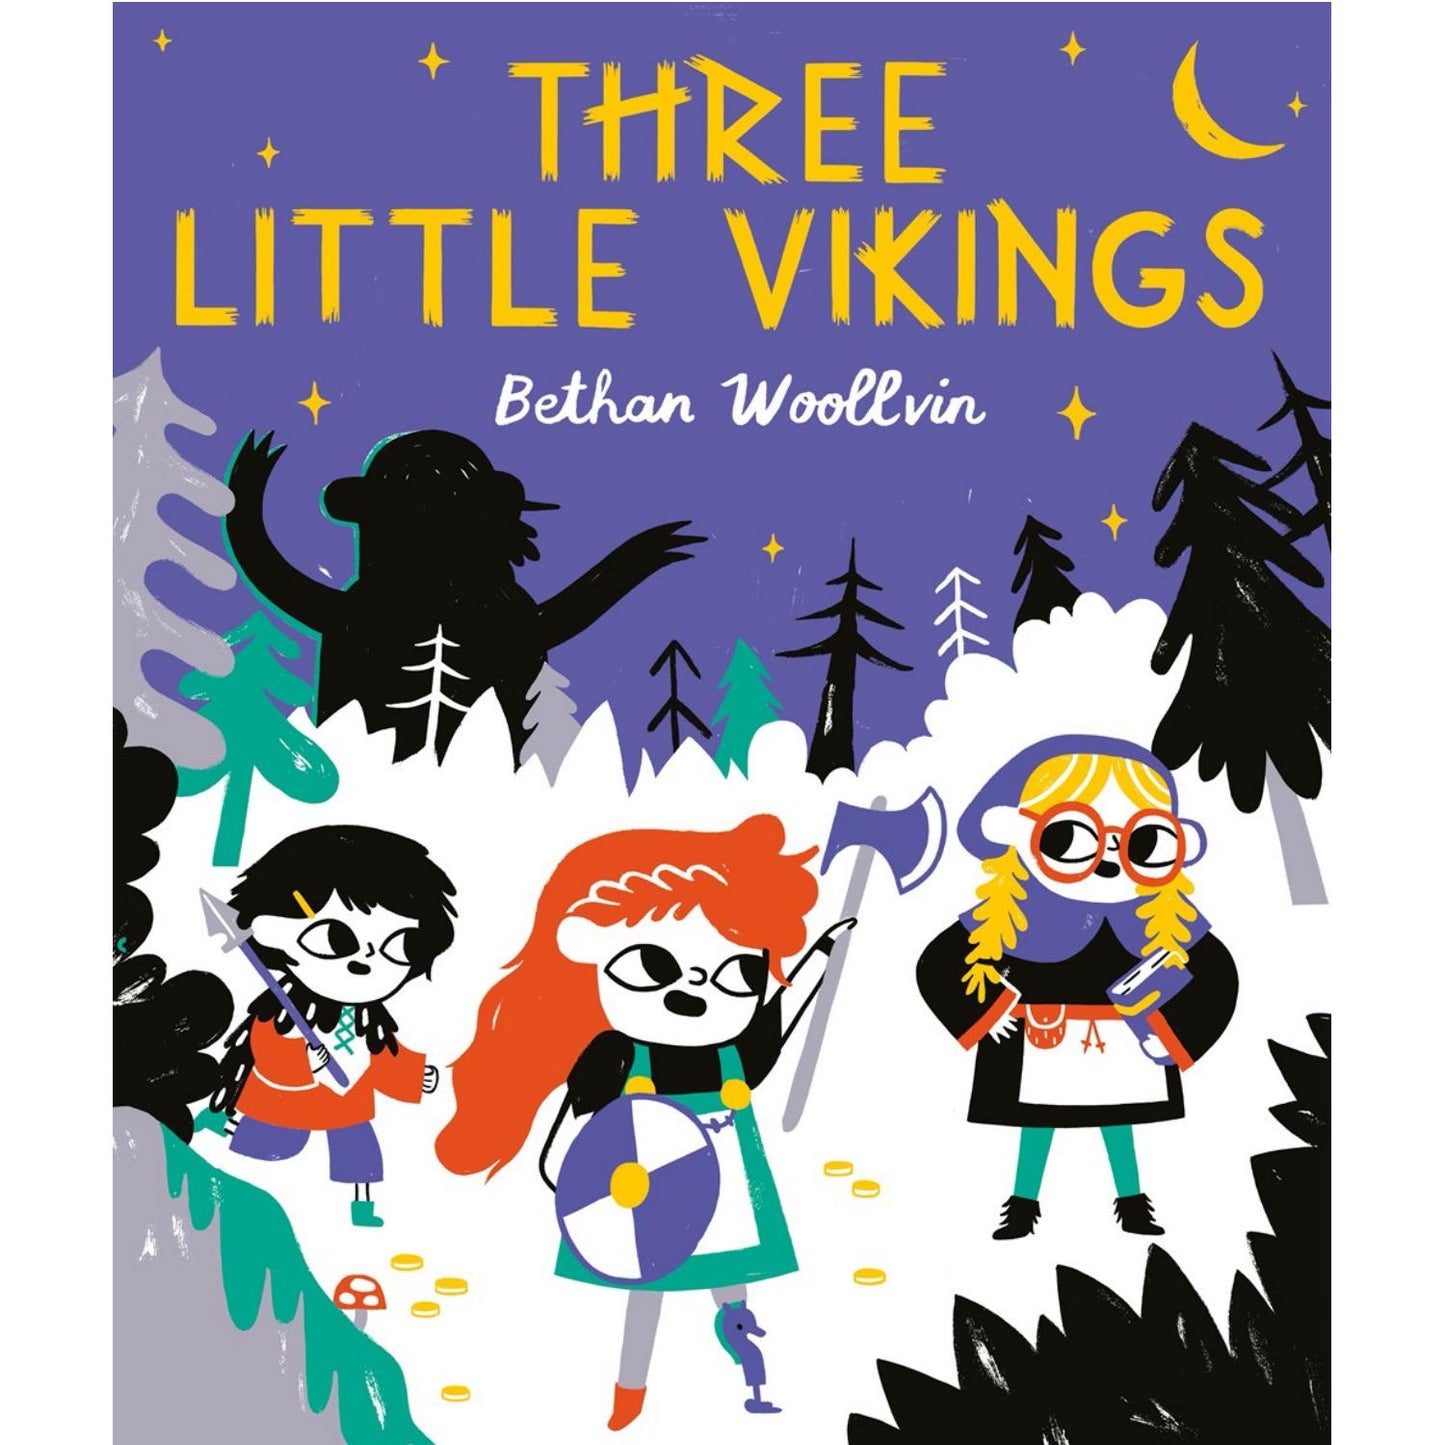 Three Little Vikings | Children’s Book on Friendship